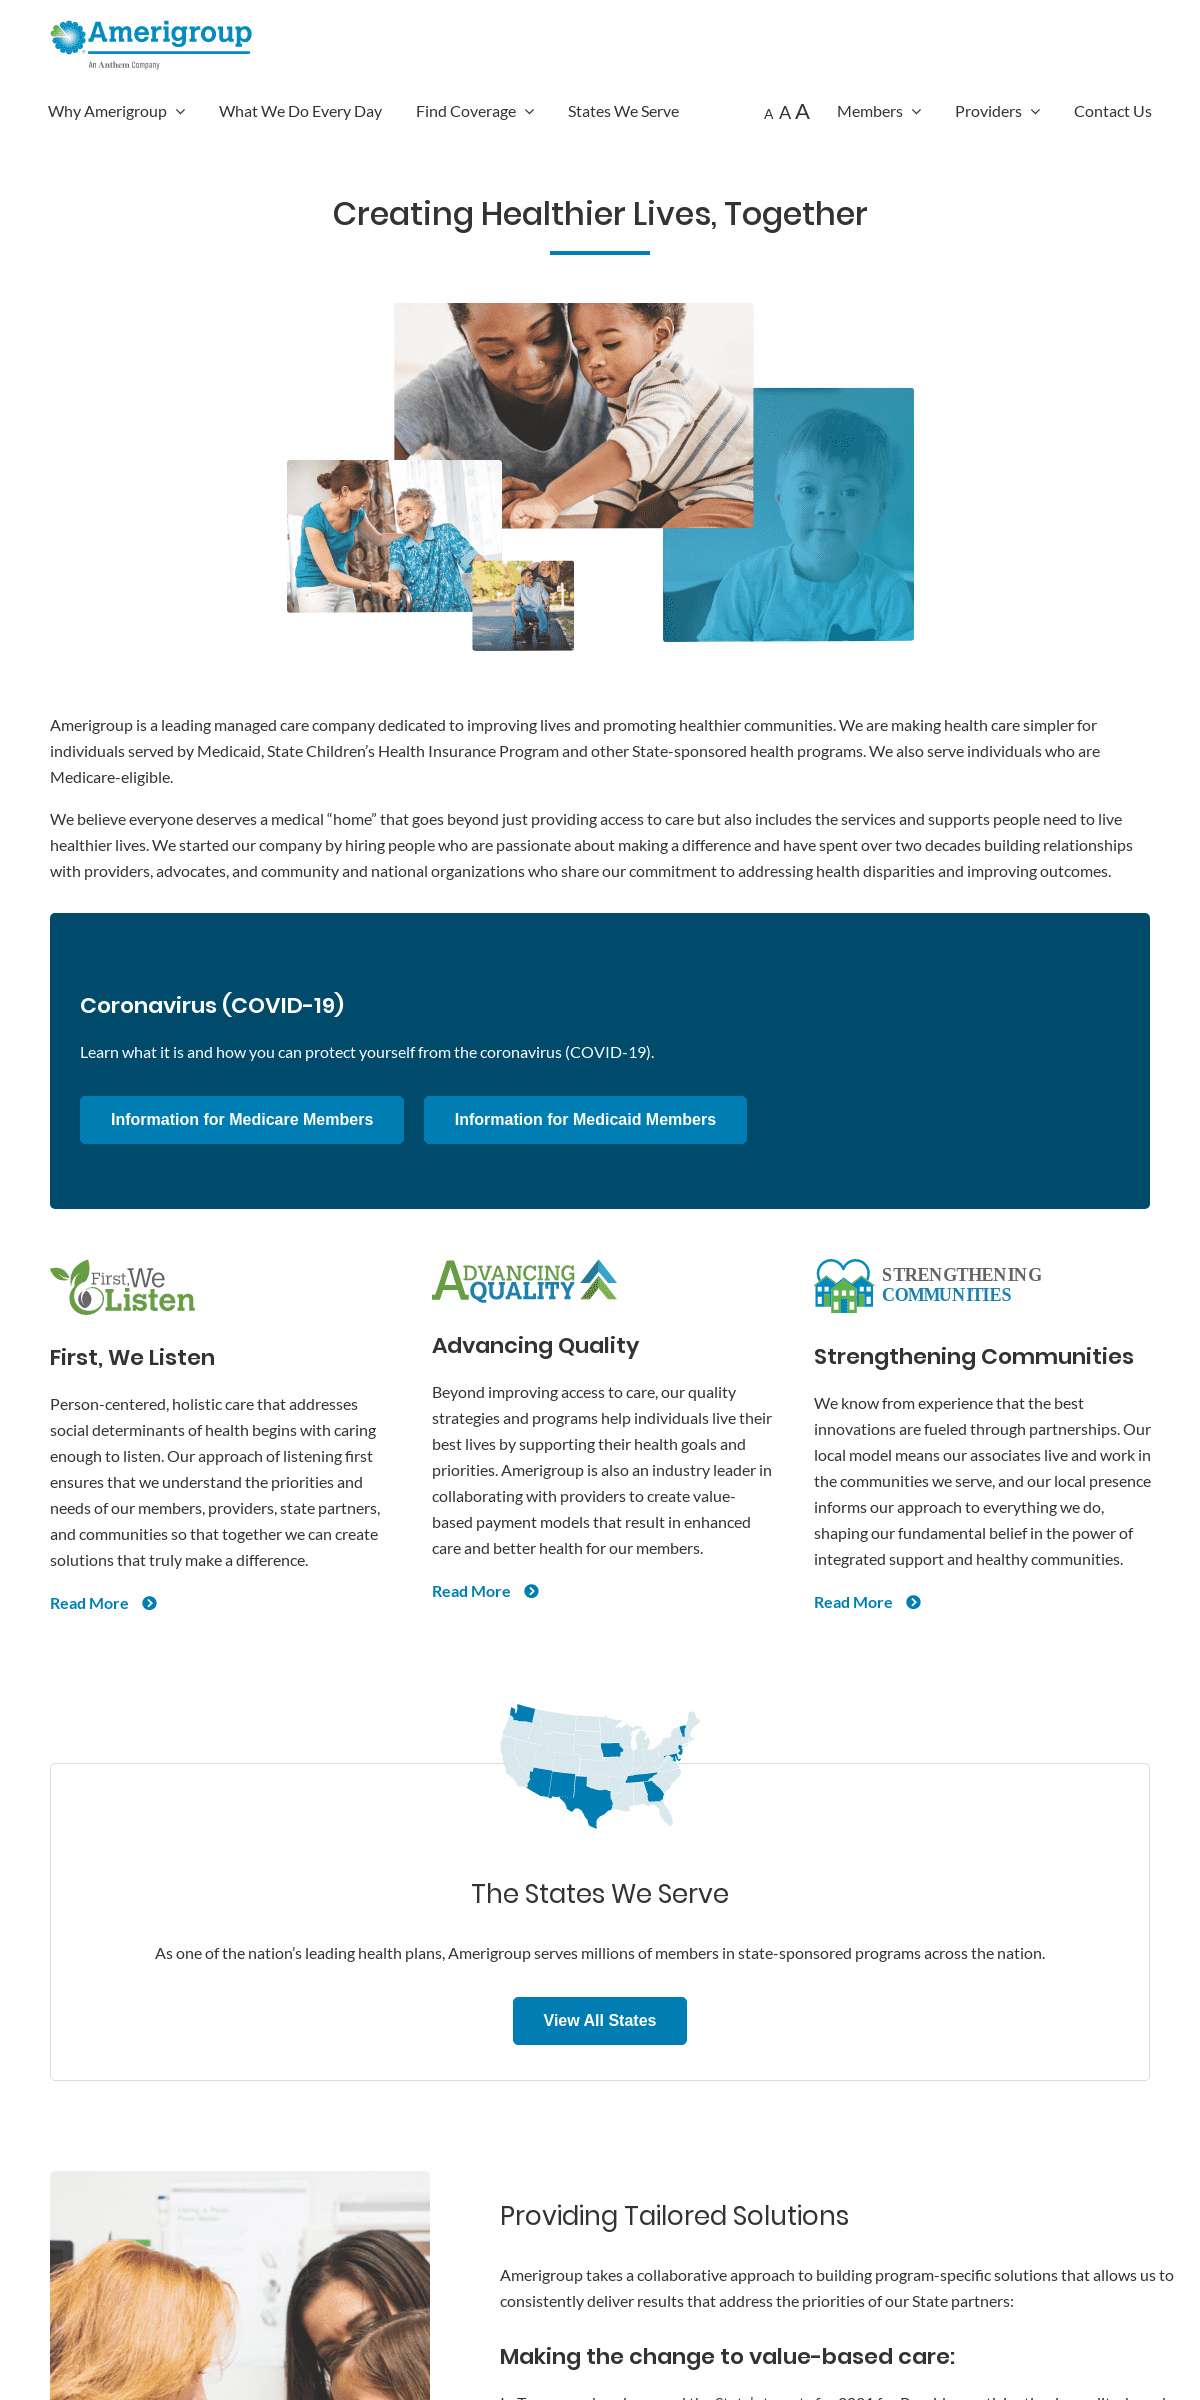 A complete backup of amerigroup.com